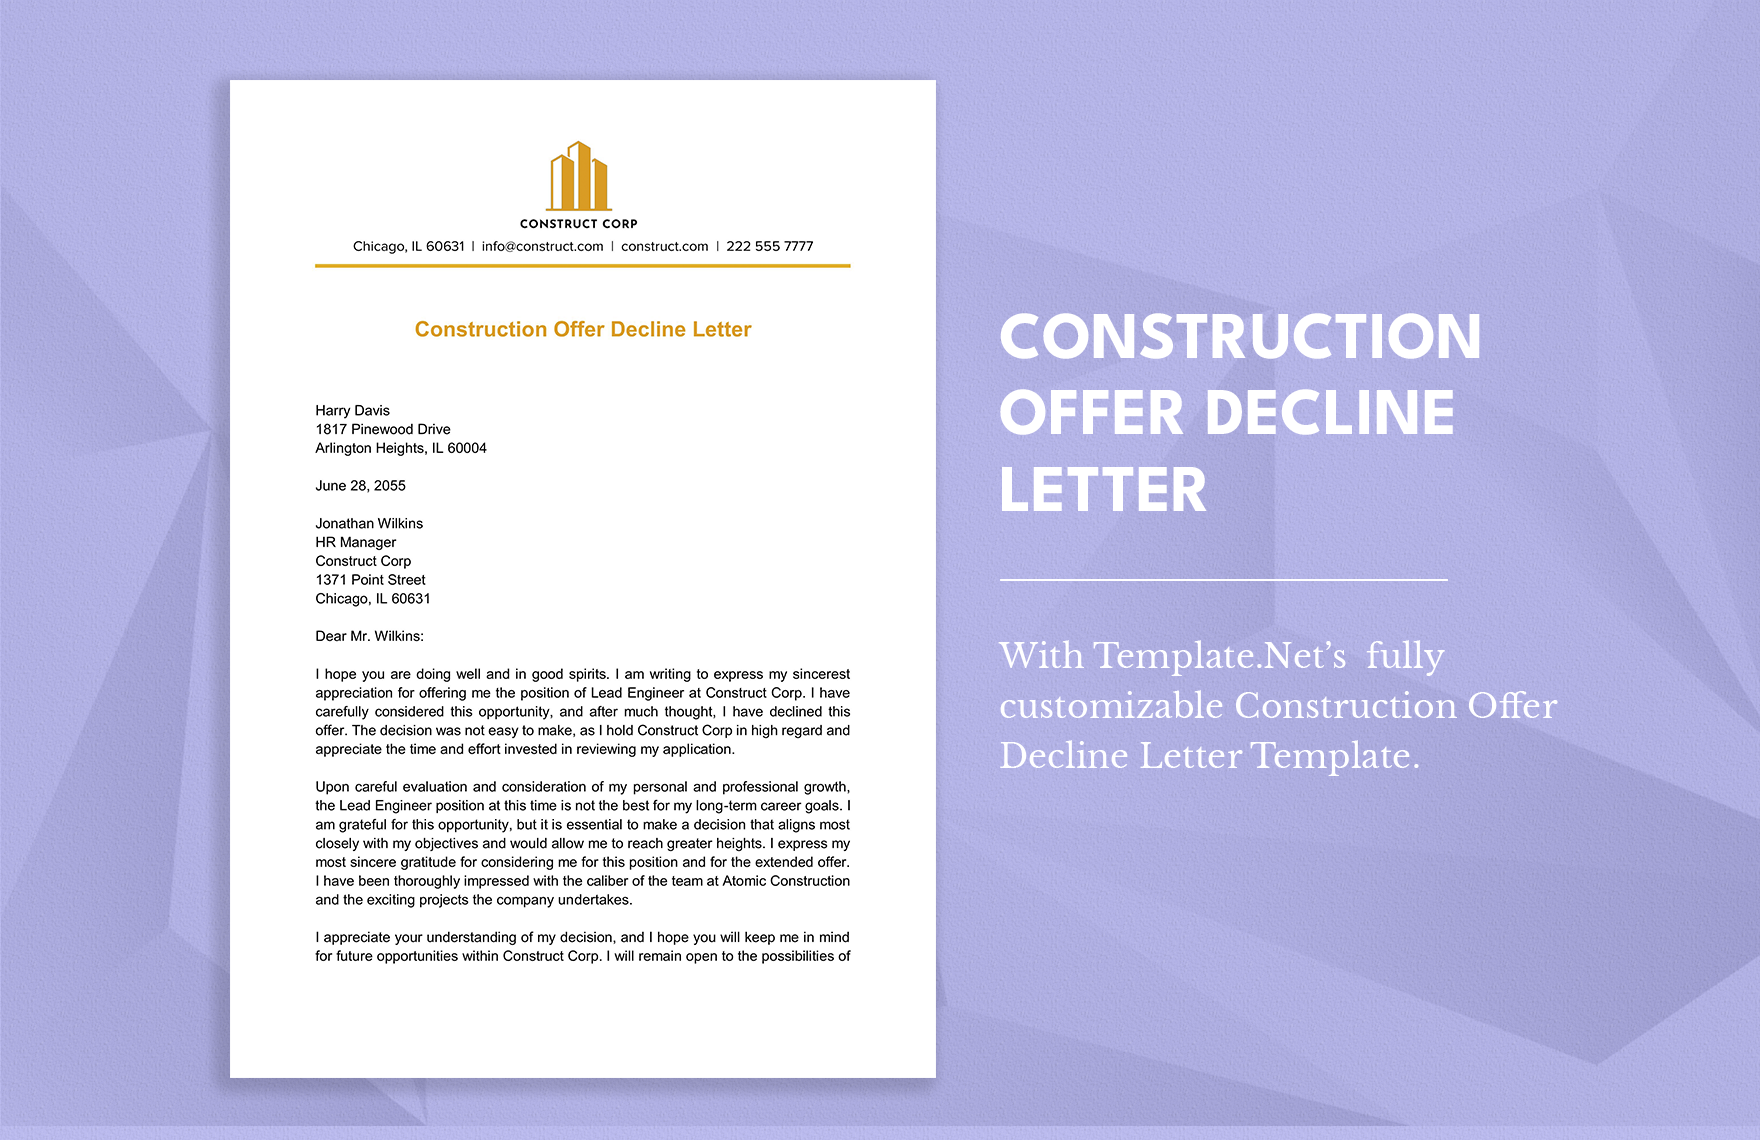 Construction Offer Decline Letter